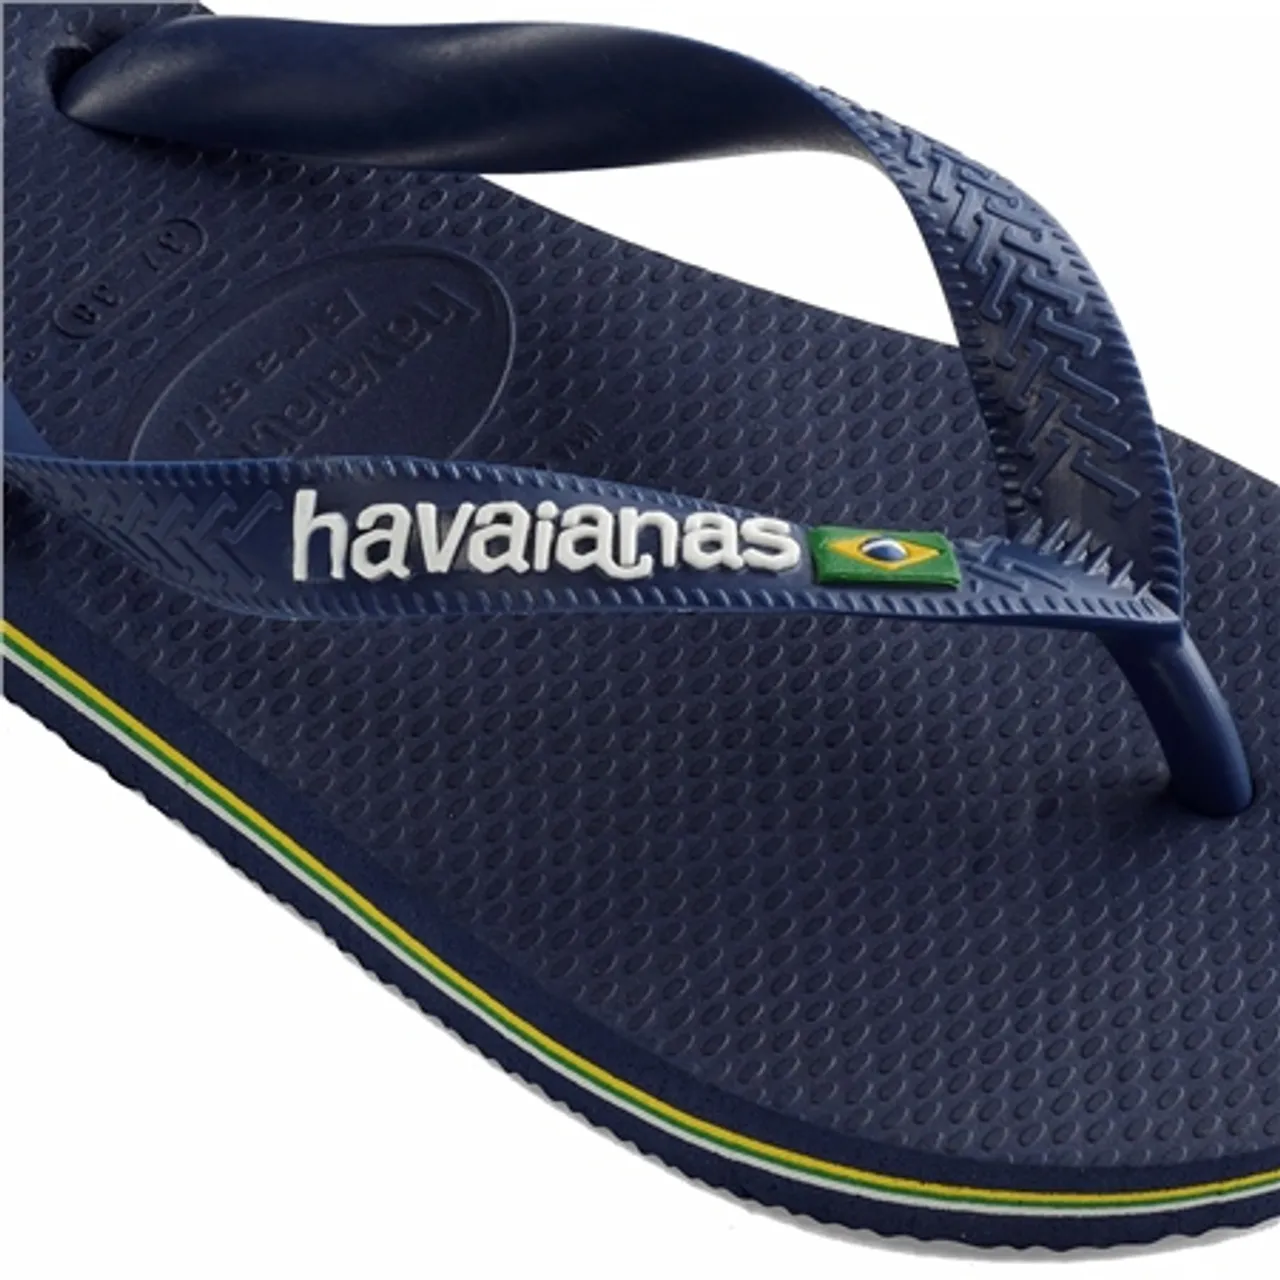 Havaianas Brazil Logo Flip Flops - Navy Blue - UK 6-7 (EU 39/40)